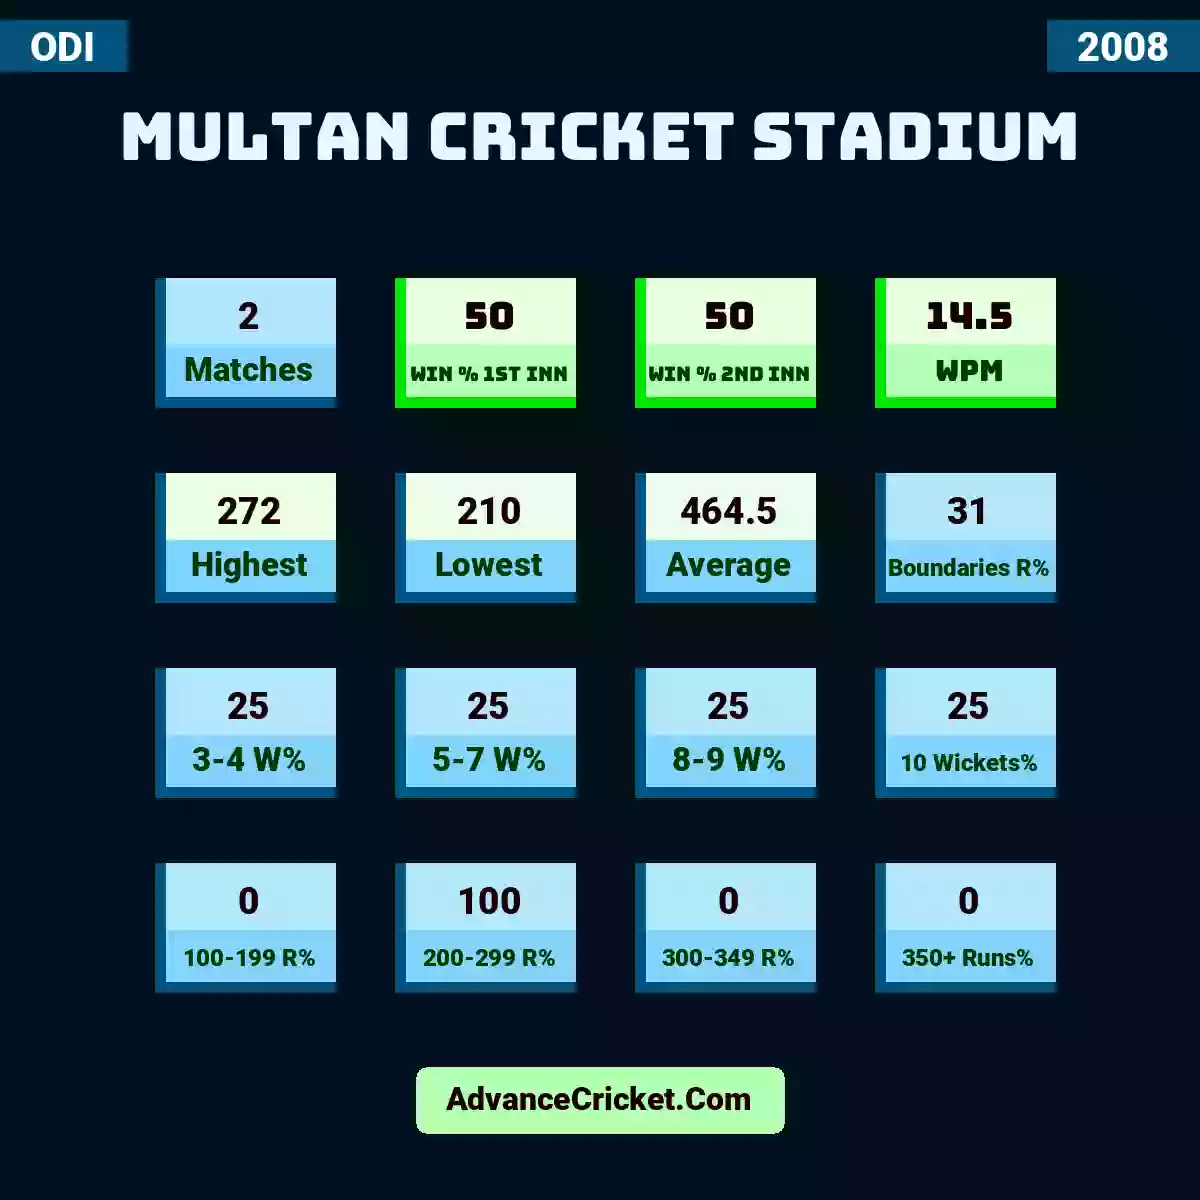 Image showing Multan Cricket Stadium with Matches: 2, Win % 1st Inn: 50, Win % 2nd Inn: 50, WPM: 14.5, Highest: 272, Lowest: 210, Average: 464.5, Boundaries R%: 31, 3-4 W%: 25, 5-7 W%: 25, 8-9 W%: 25, 10 Wickets%: 25, 100-199 R%: 0, 200-299 R%: 100, 300-349 R%: 0, 350+ Runs%: 0.